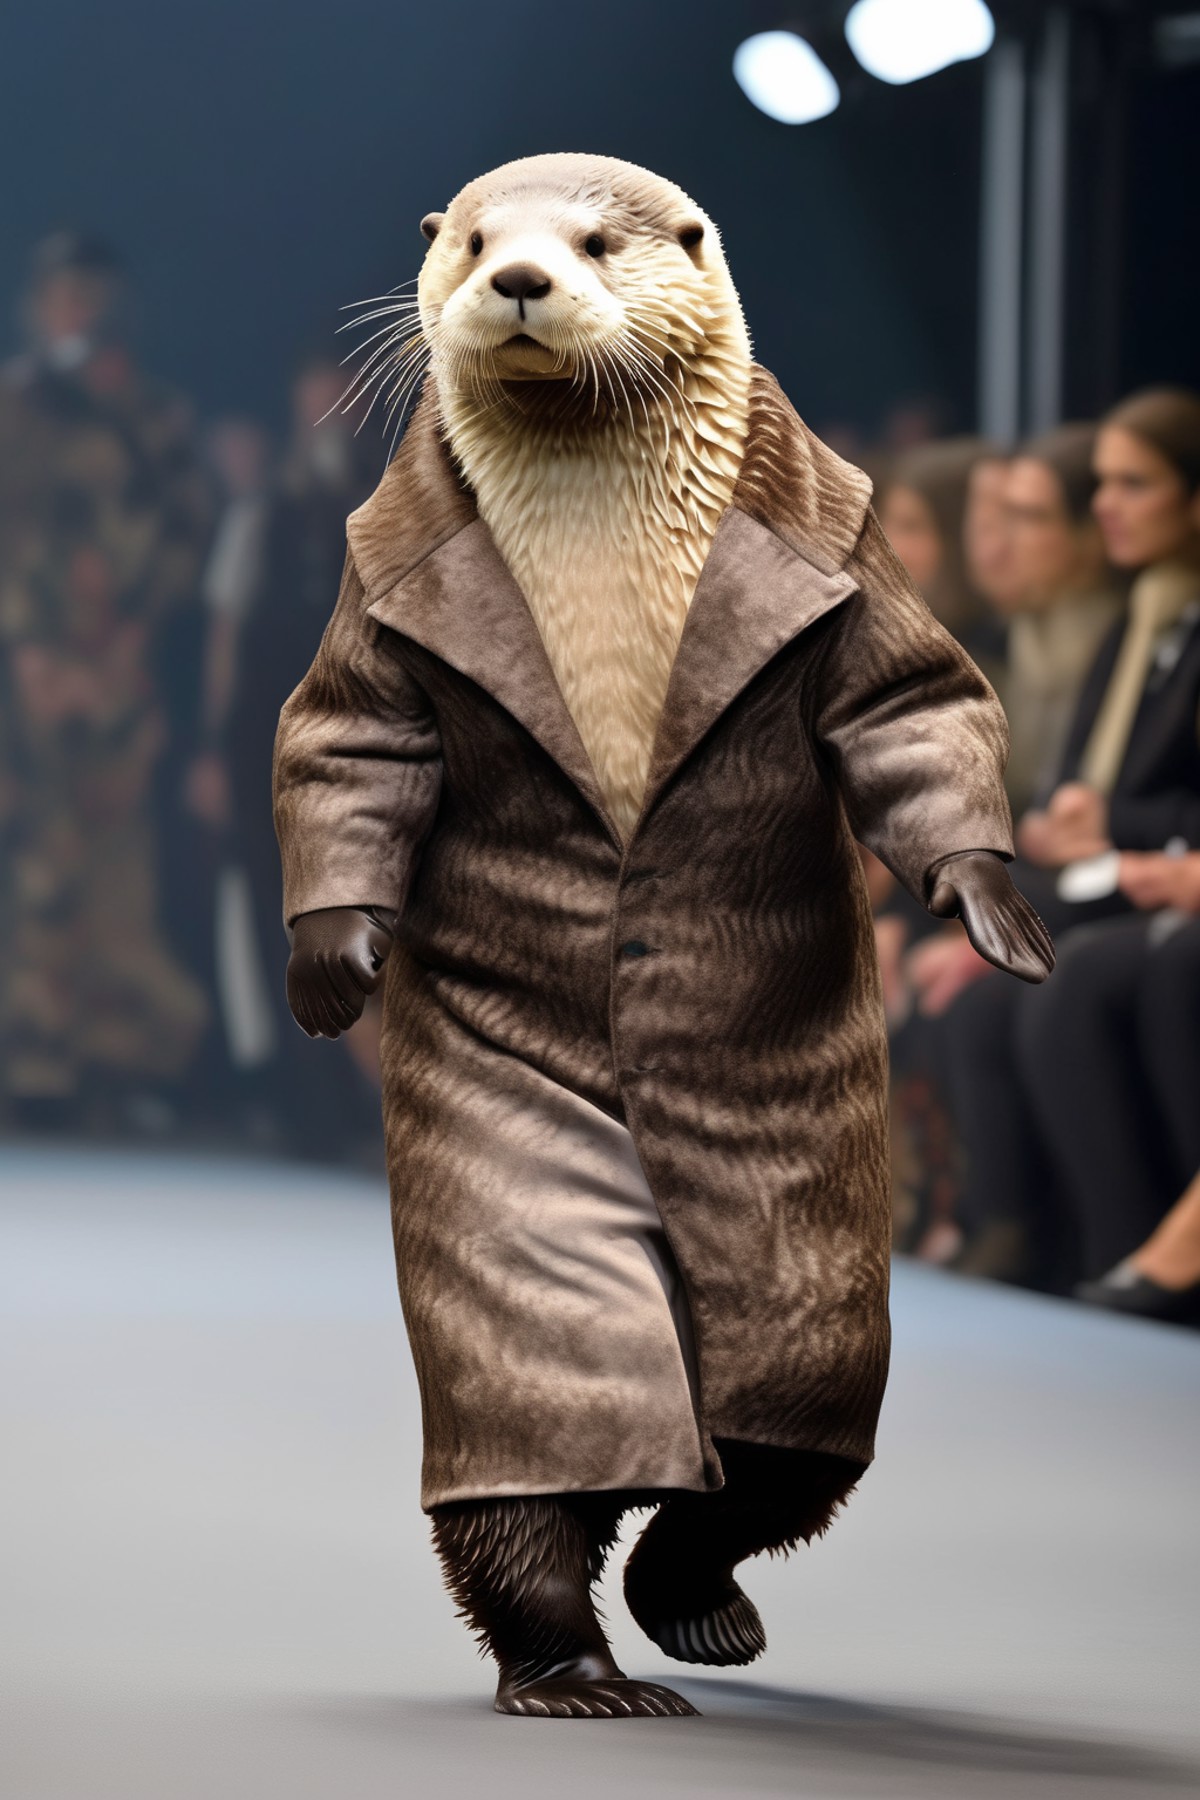 <lora:Dressed animals:1>Dressed animals - sea otter fashion model walking the runway at the Milan fashion show